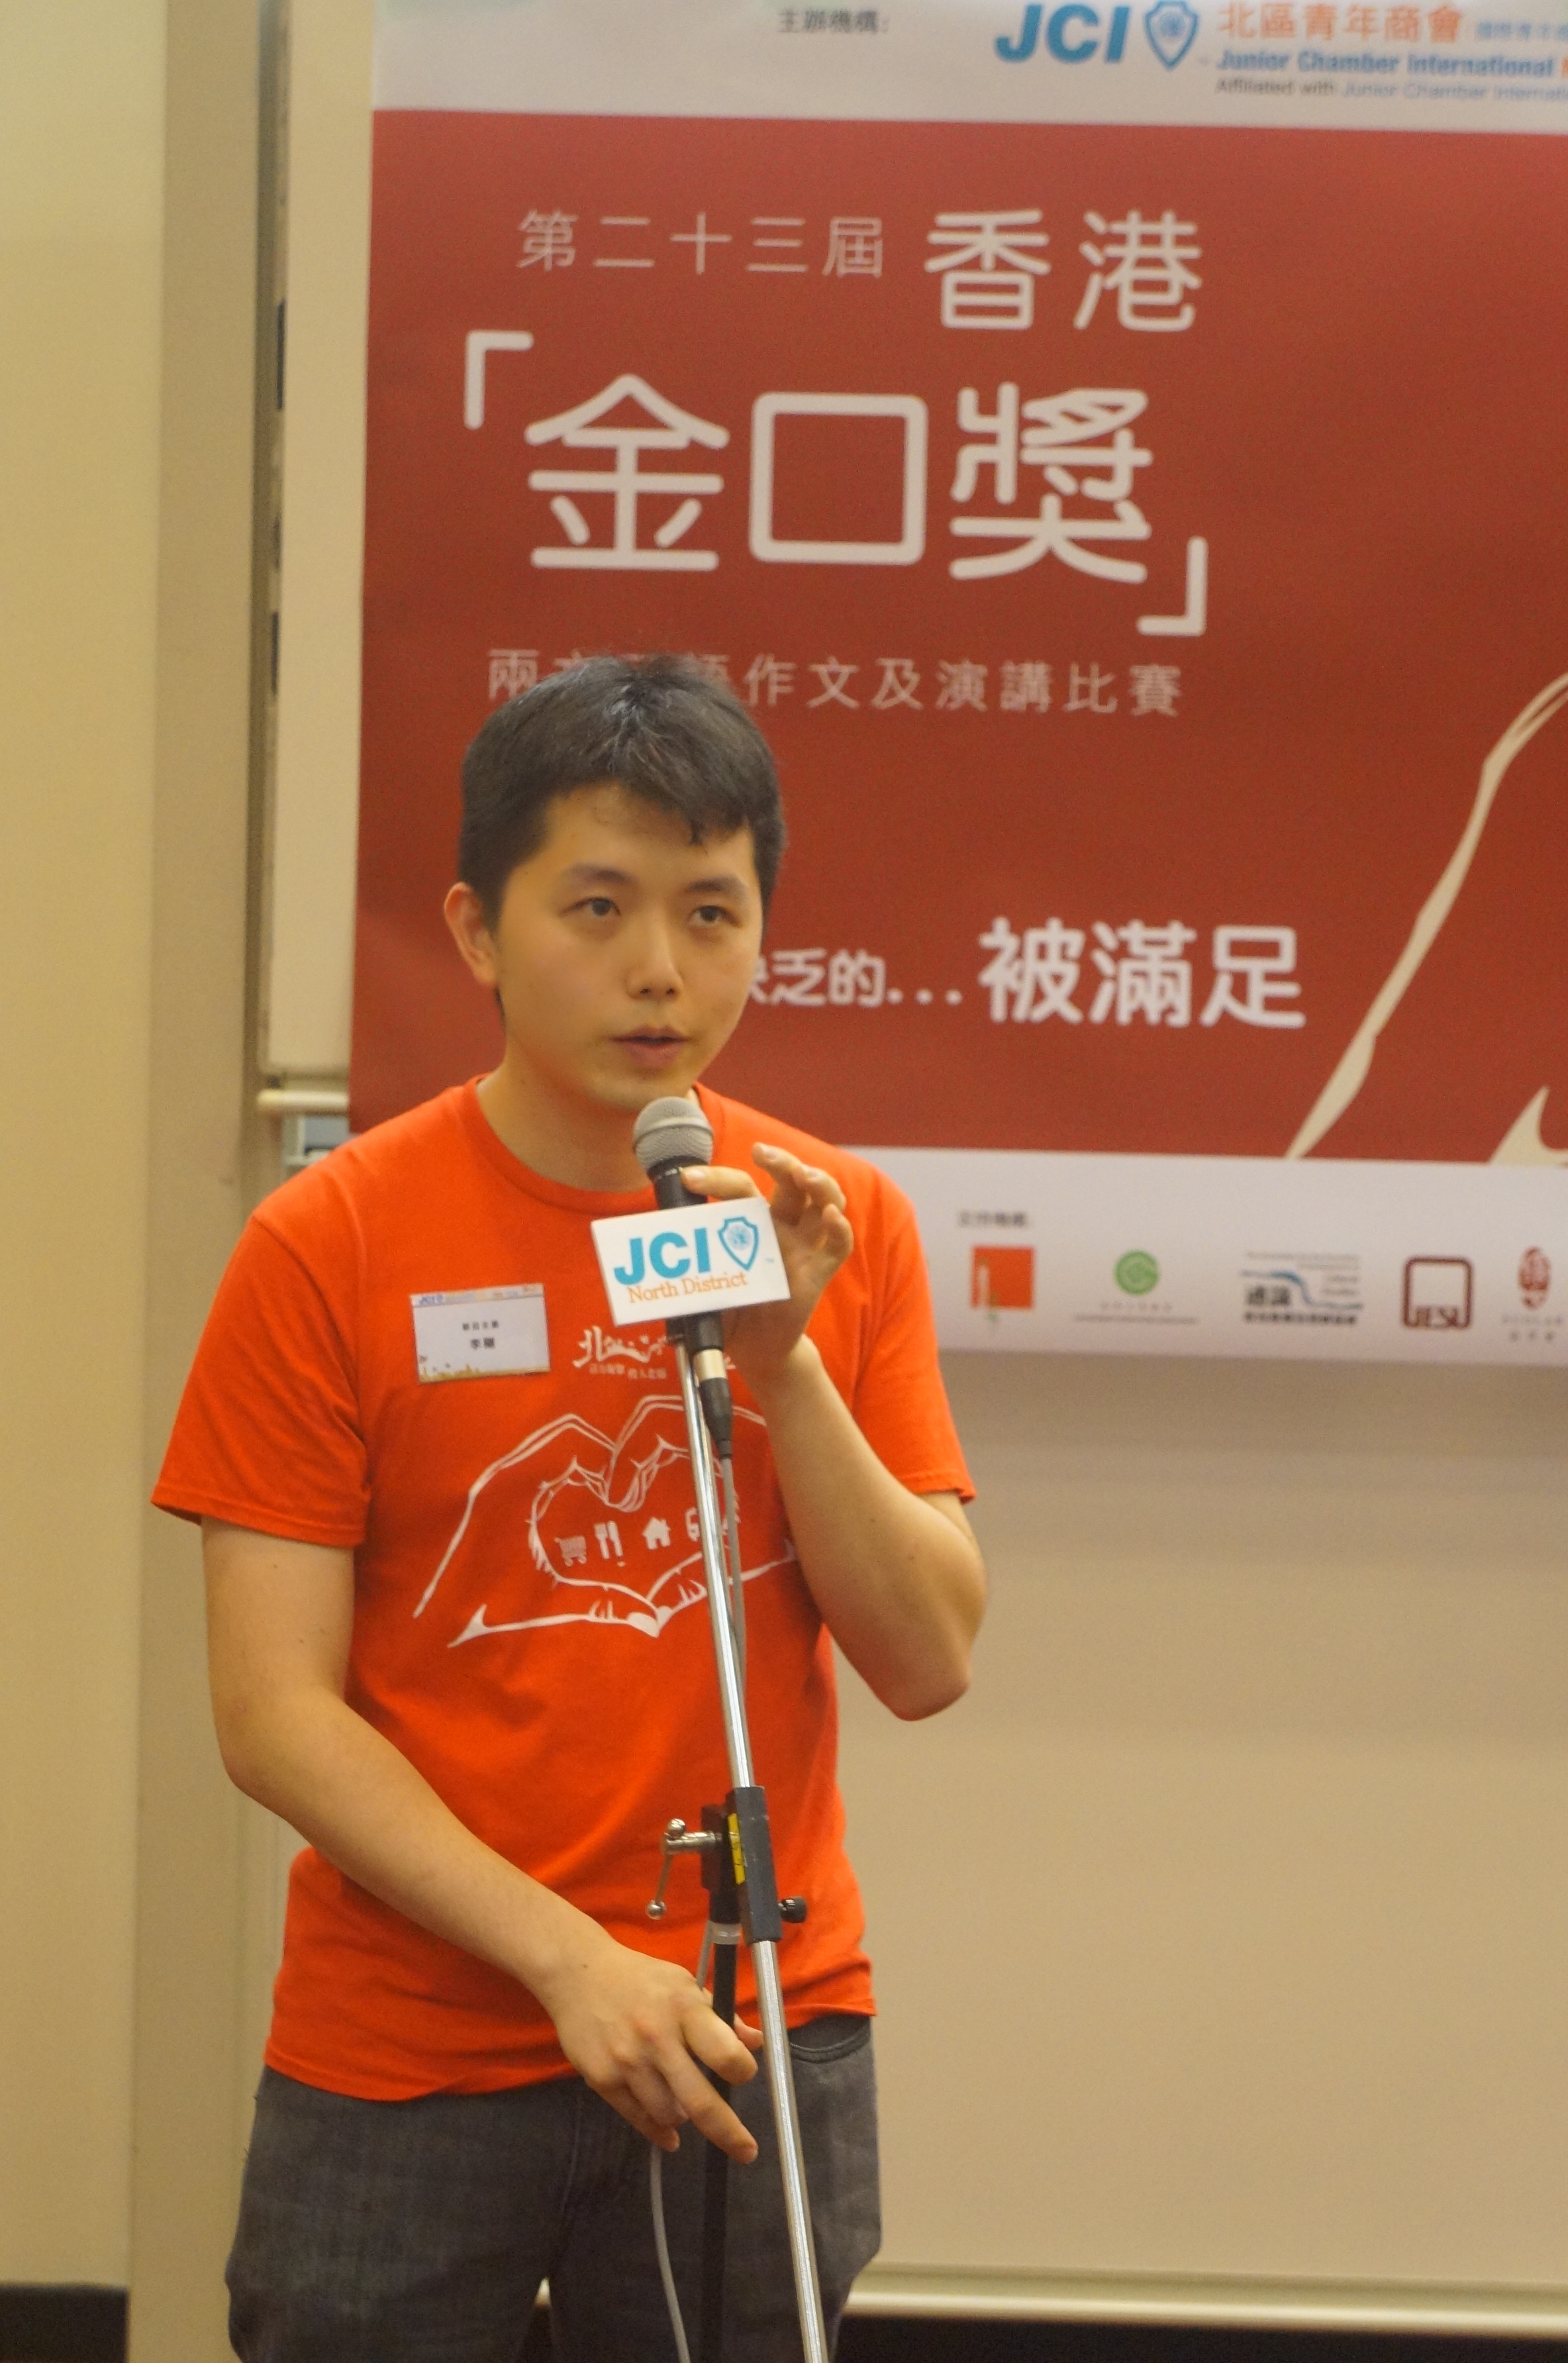 MC James LI 李剛司儀工作紀錄: 北區青年商會第23屆香港「金口獎」決賽